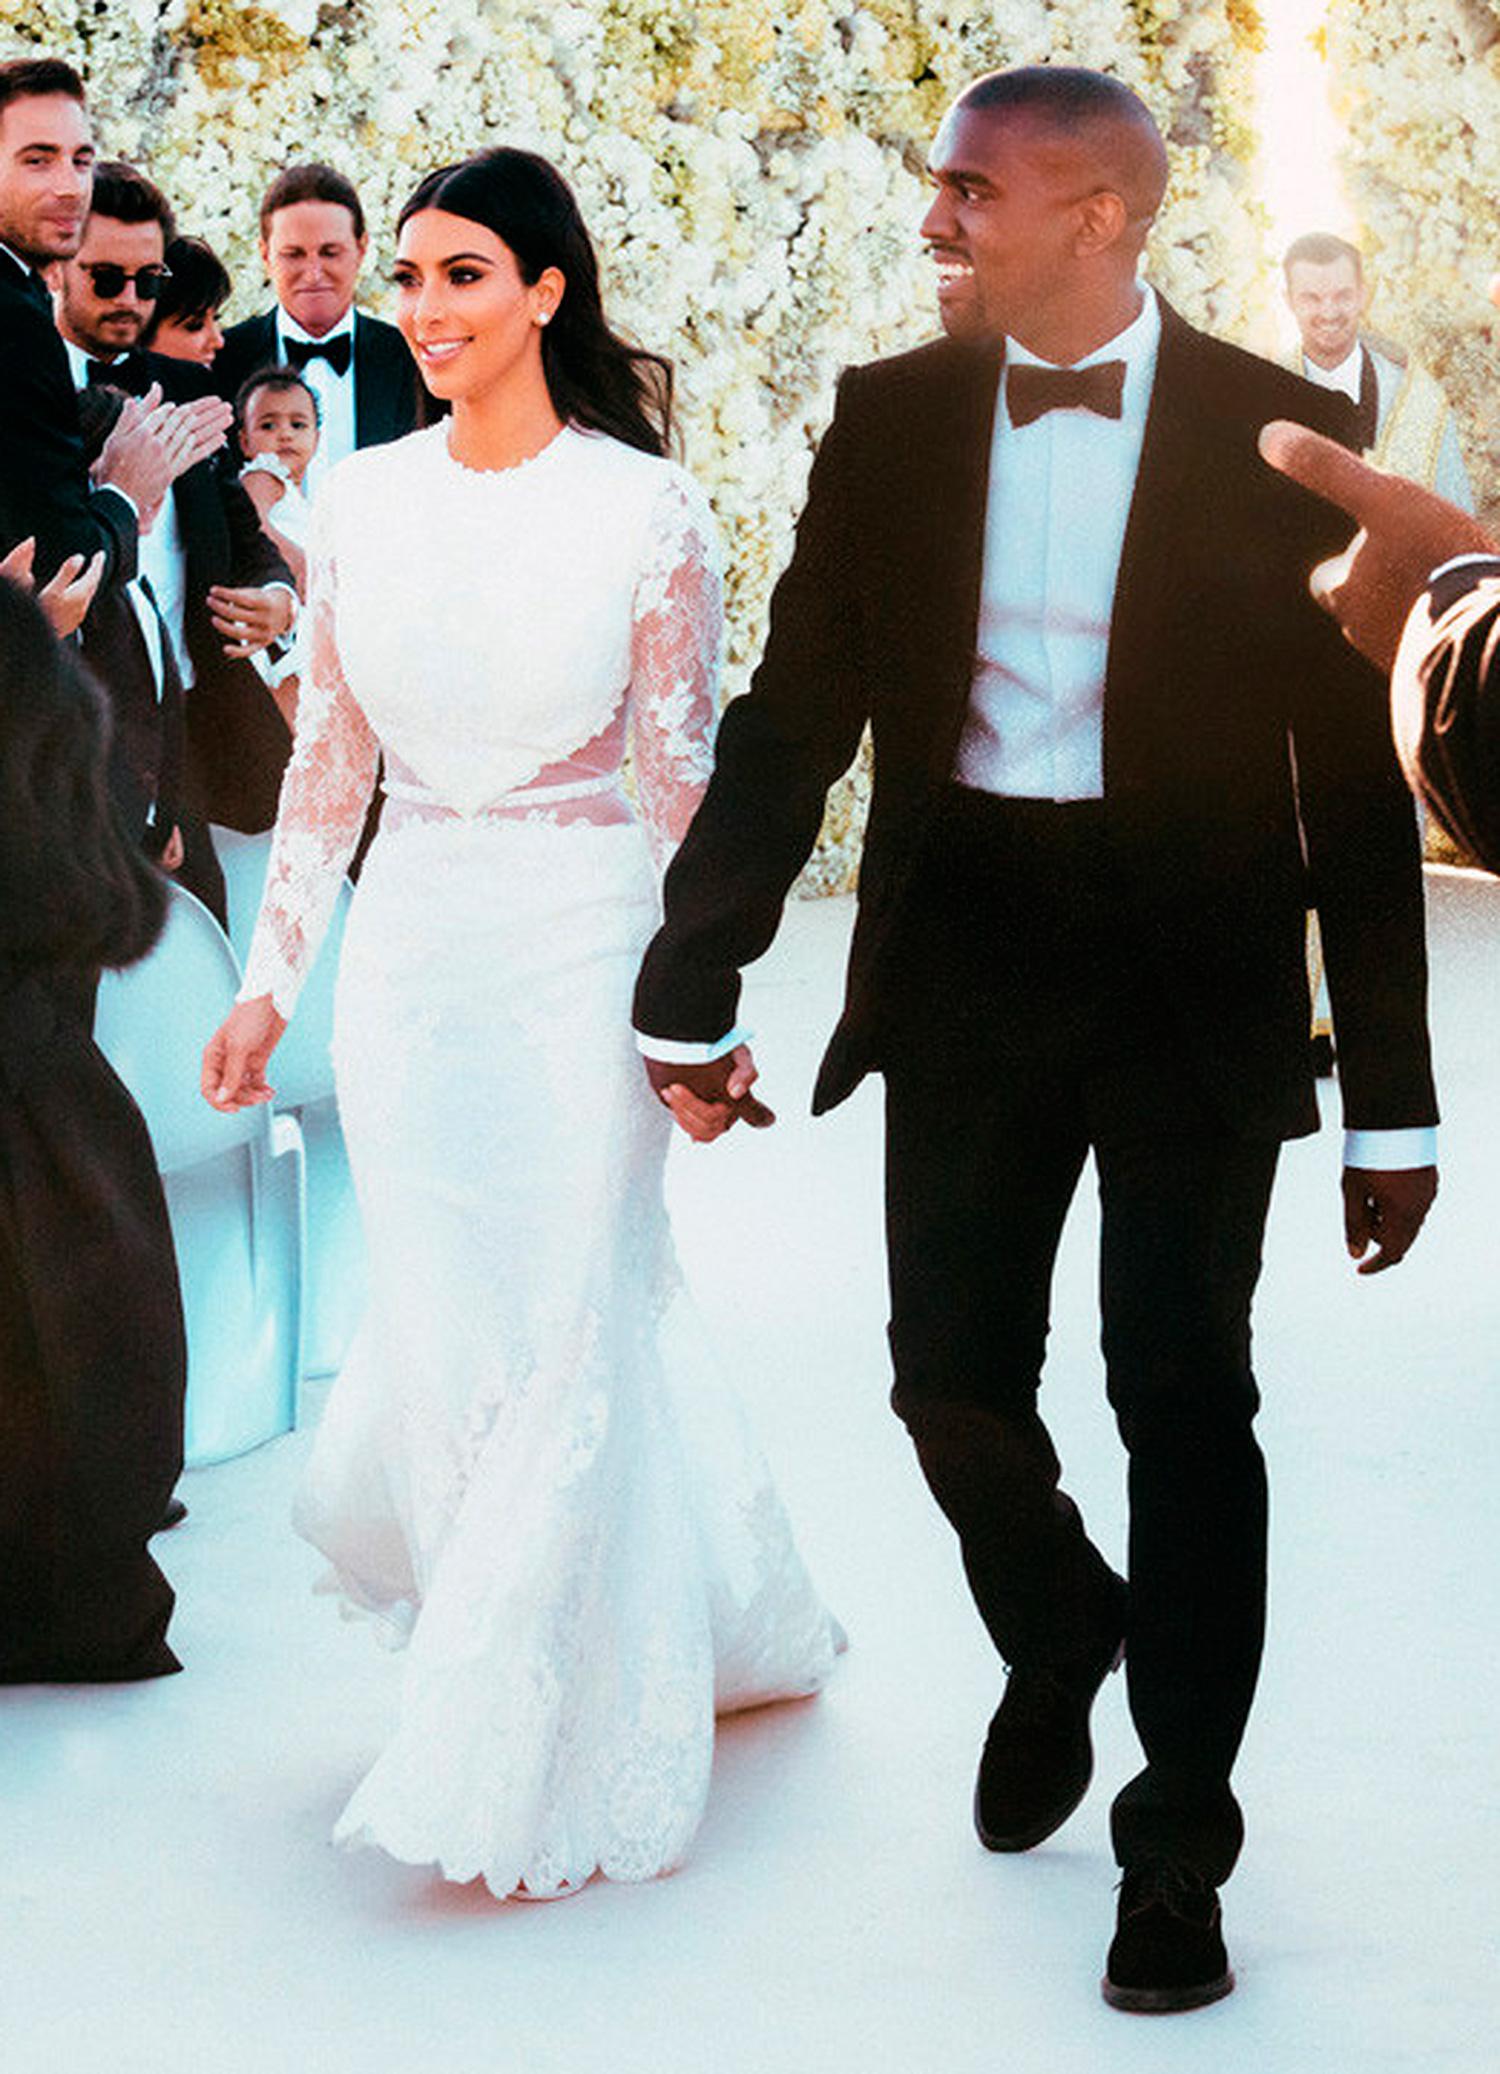 Kim Kardashian och Kanye West gifte sig på Forte di Belvedere 
i italienska Florens i maj.